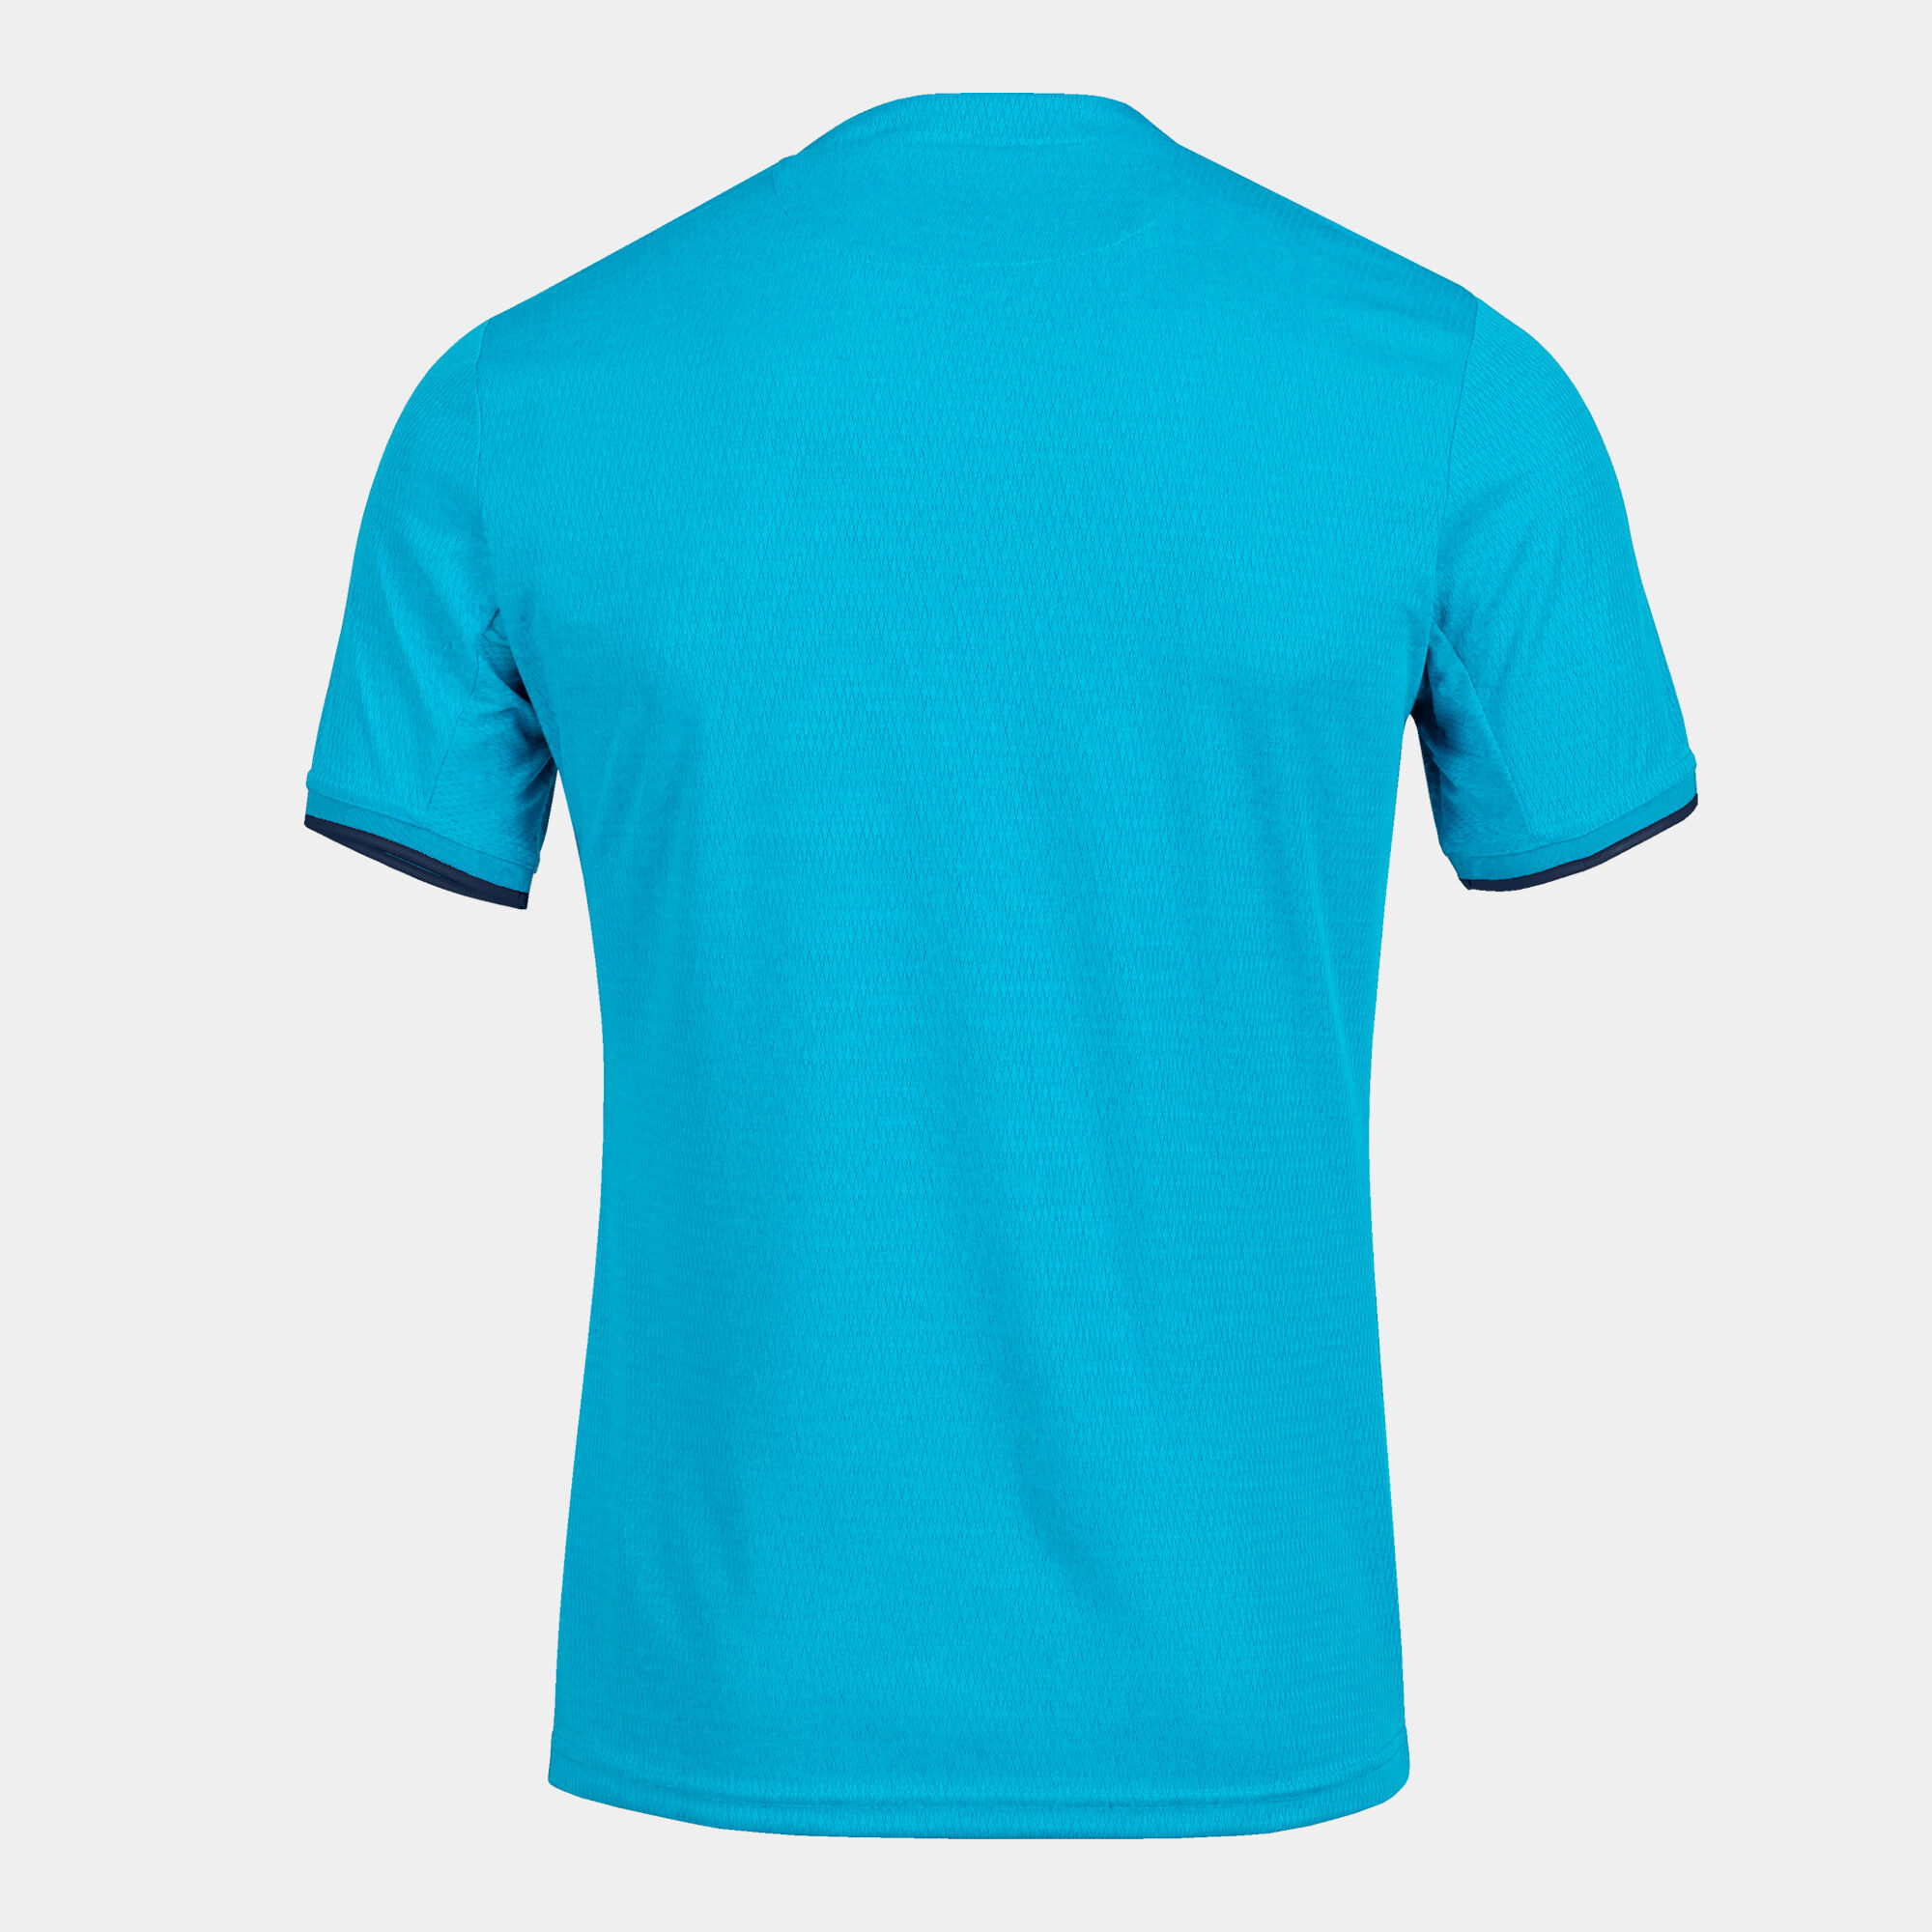 Shirt short sleeve man Toletum IV fluorescent turquoise navy blue